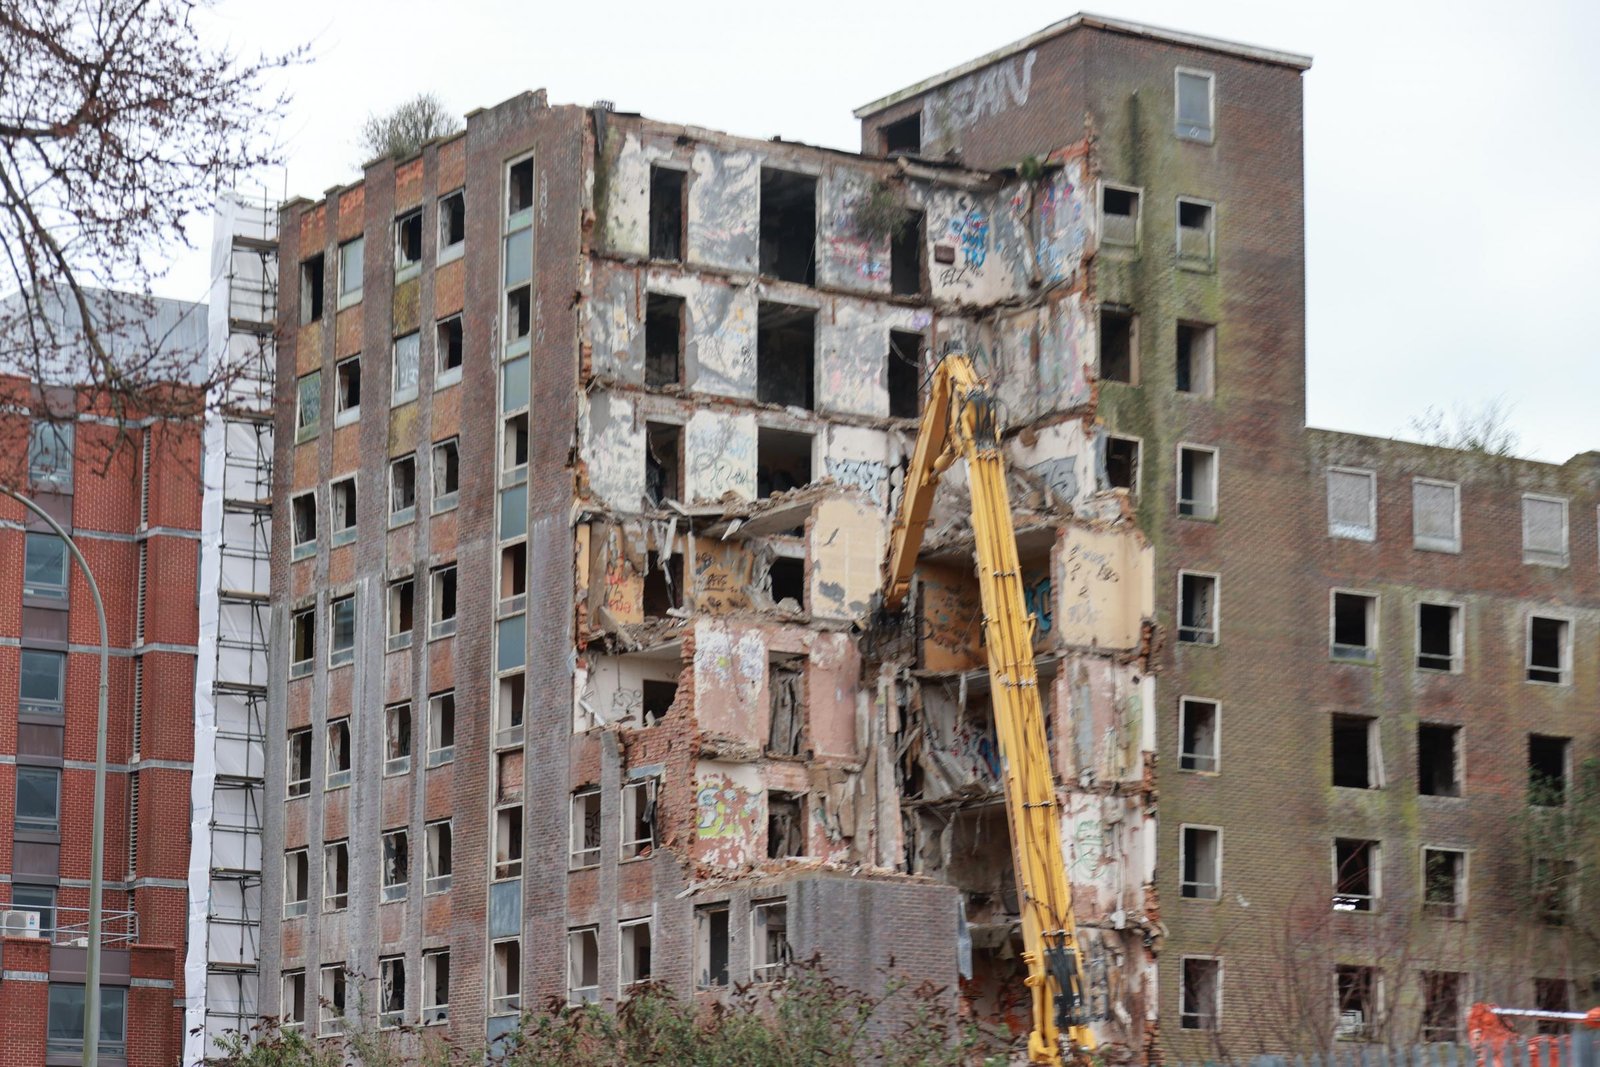 Demolition of Brightons' ugliest building, Anston House in Preston Road, began in March